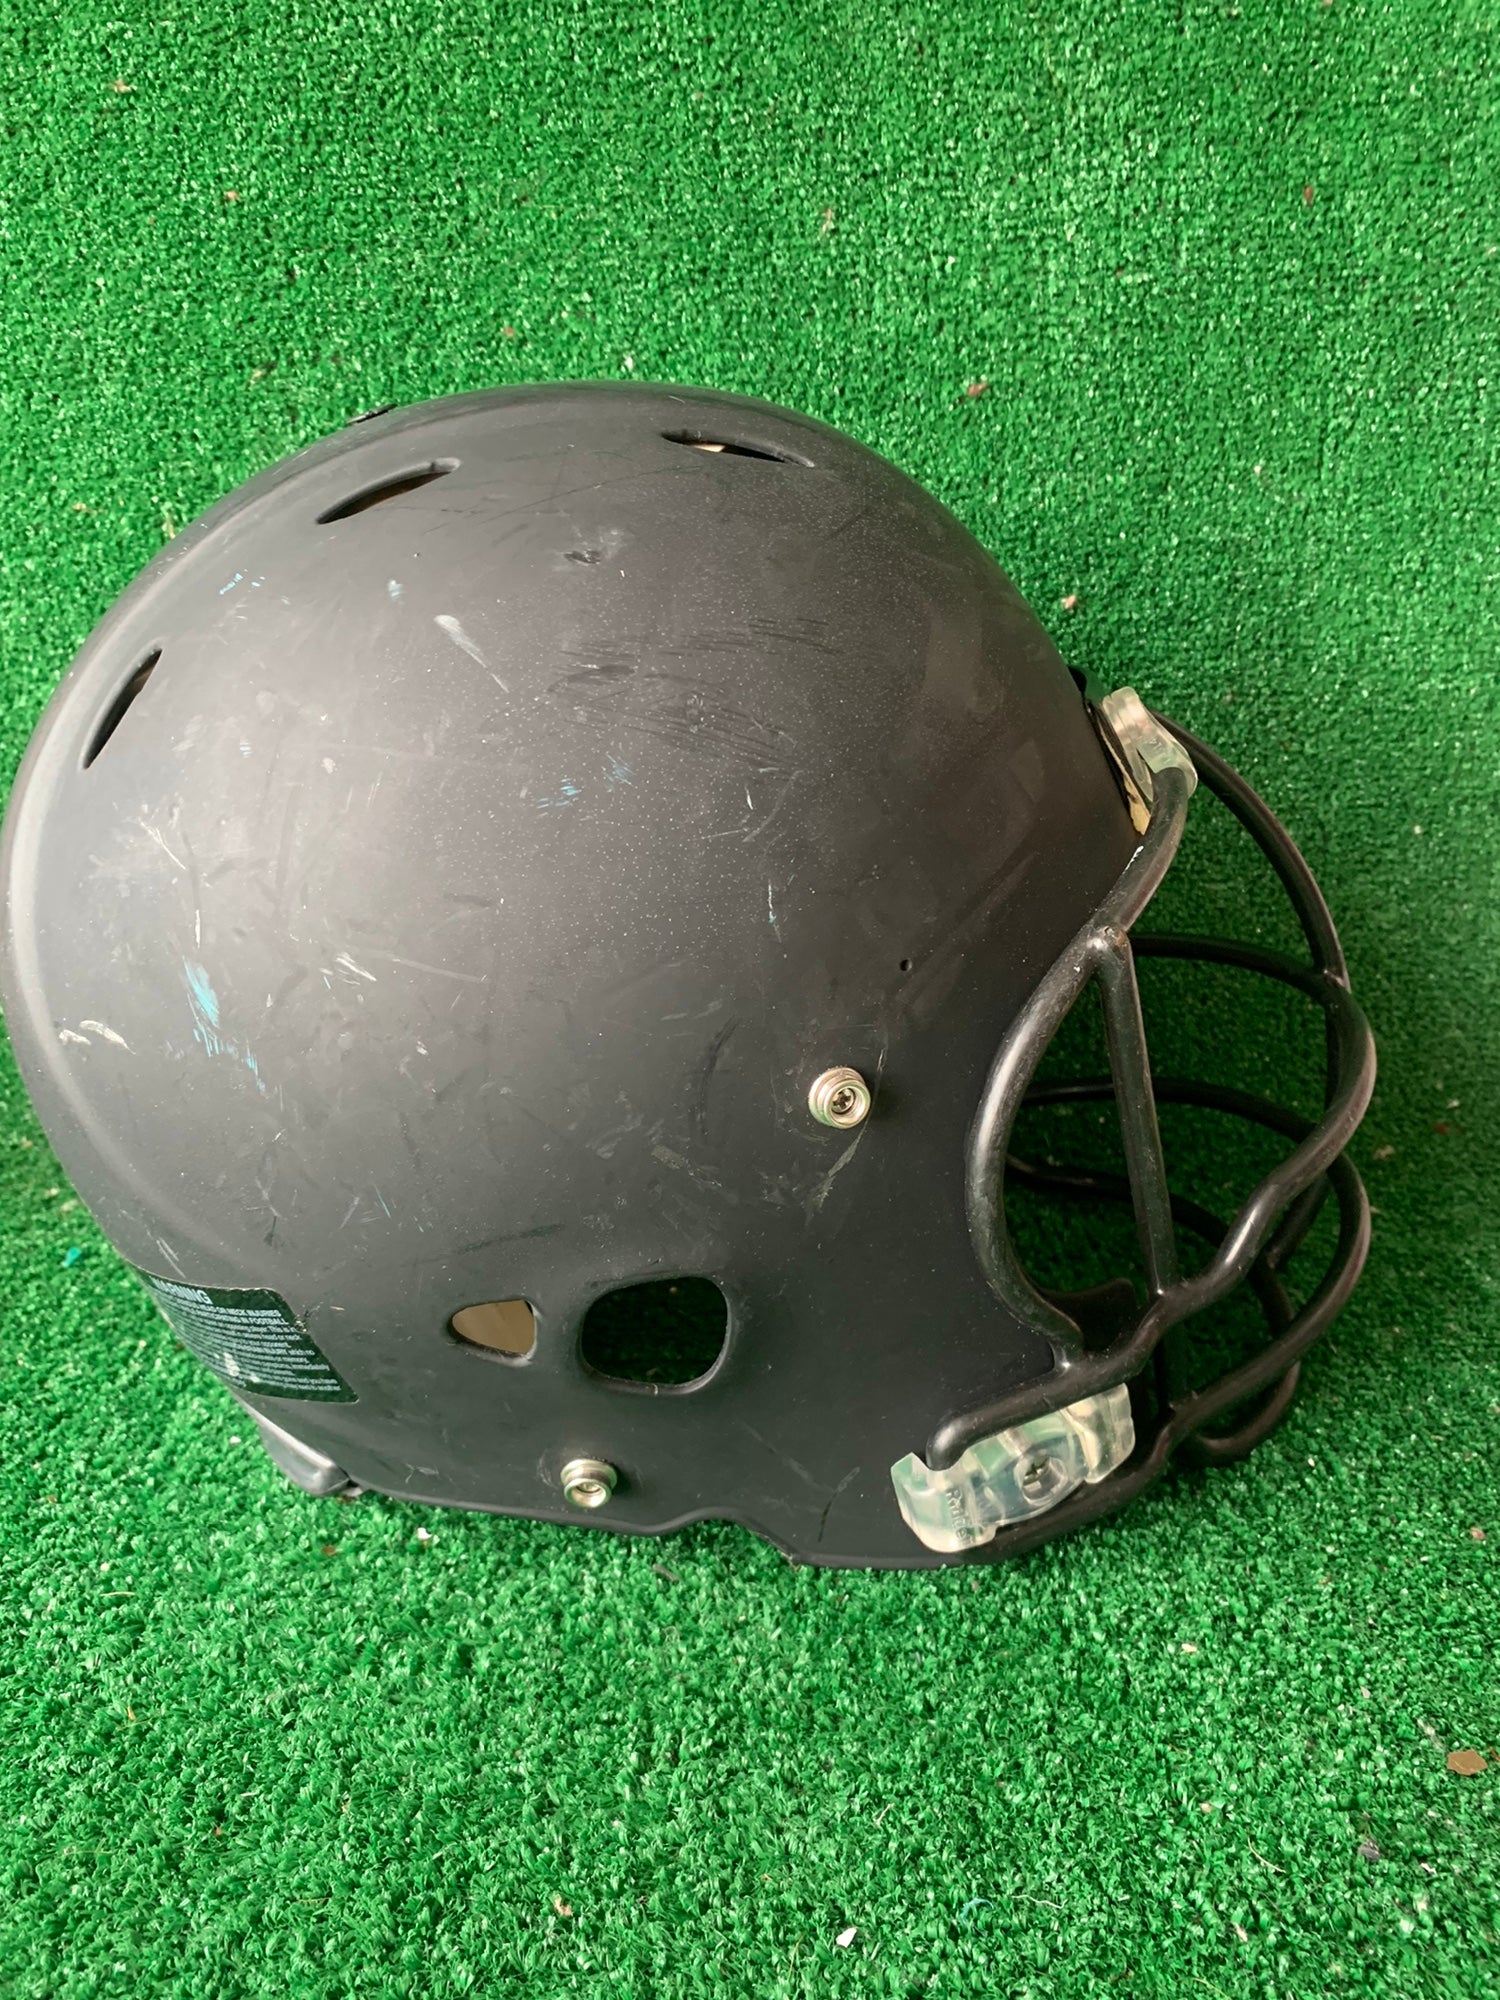 Adult Large - Riddell Revolution Football Helmet - Black 